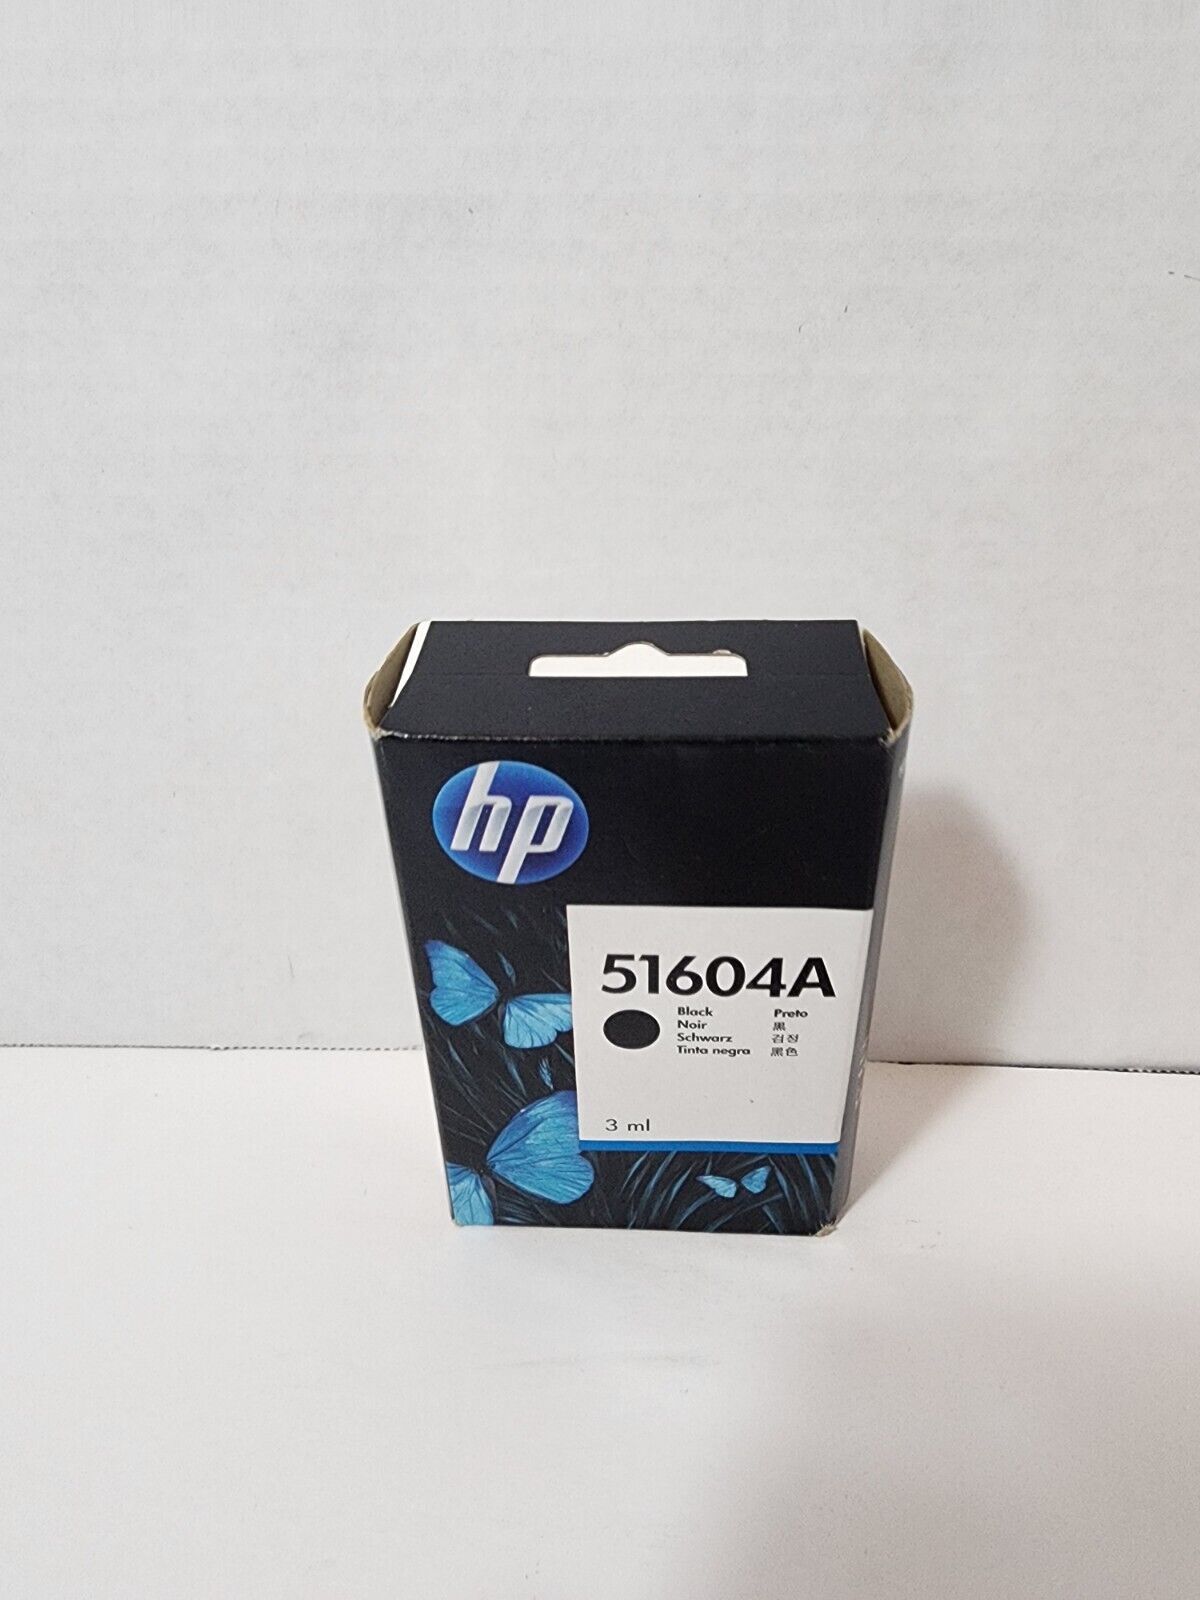 Genuine HP 51604A Black Ink Cartridge Factory Sealed  Warranty End Date Sep 2012